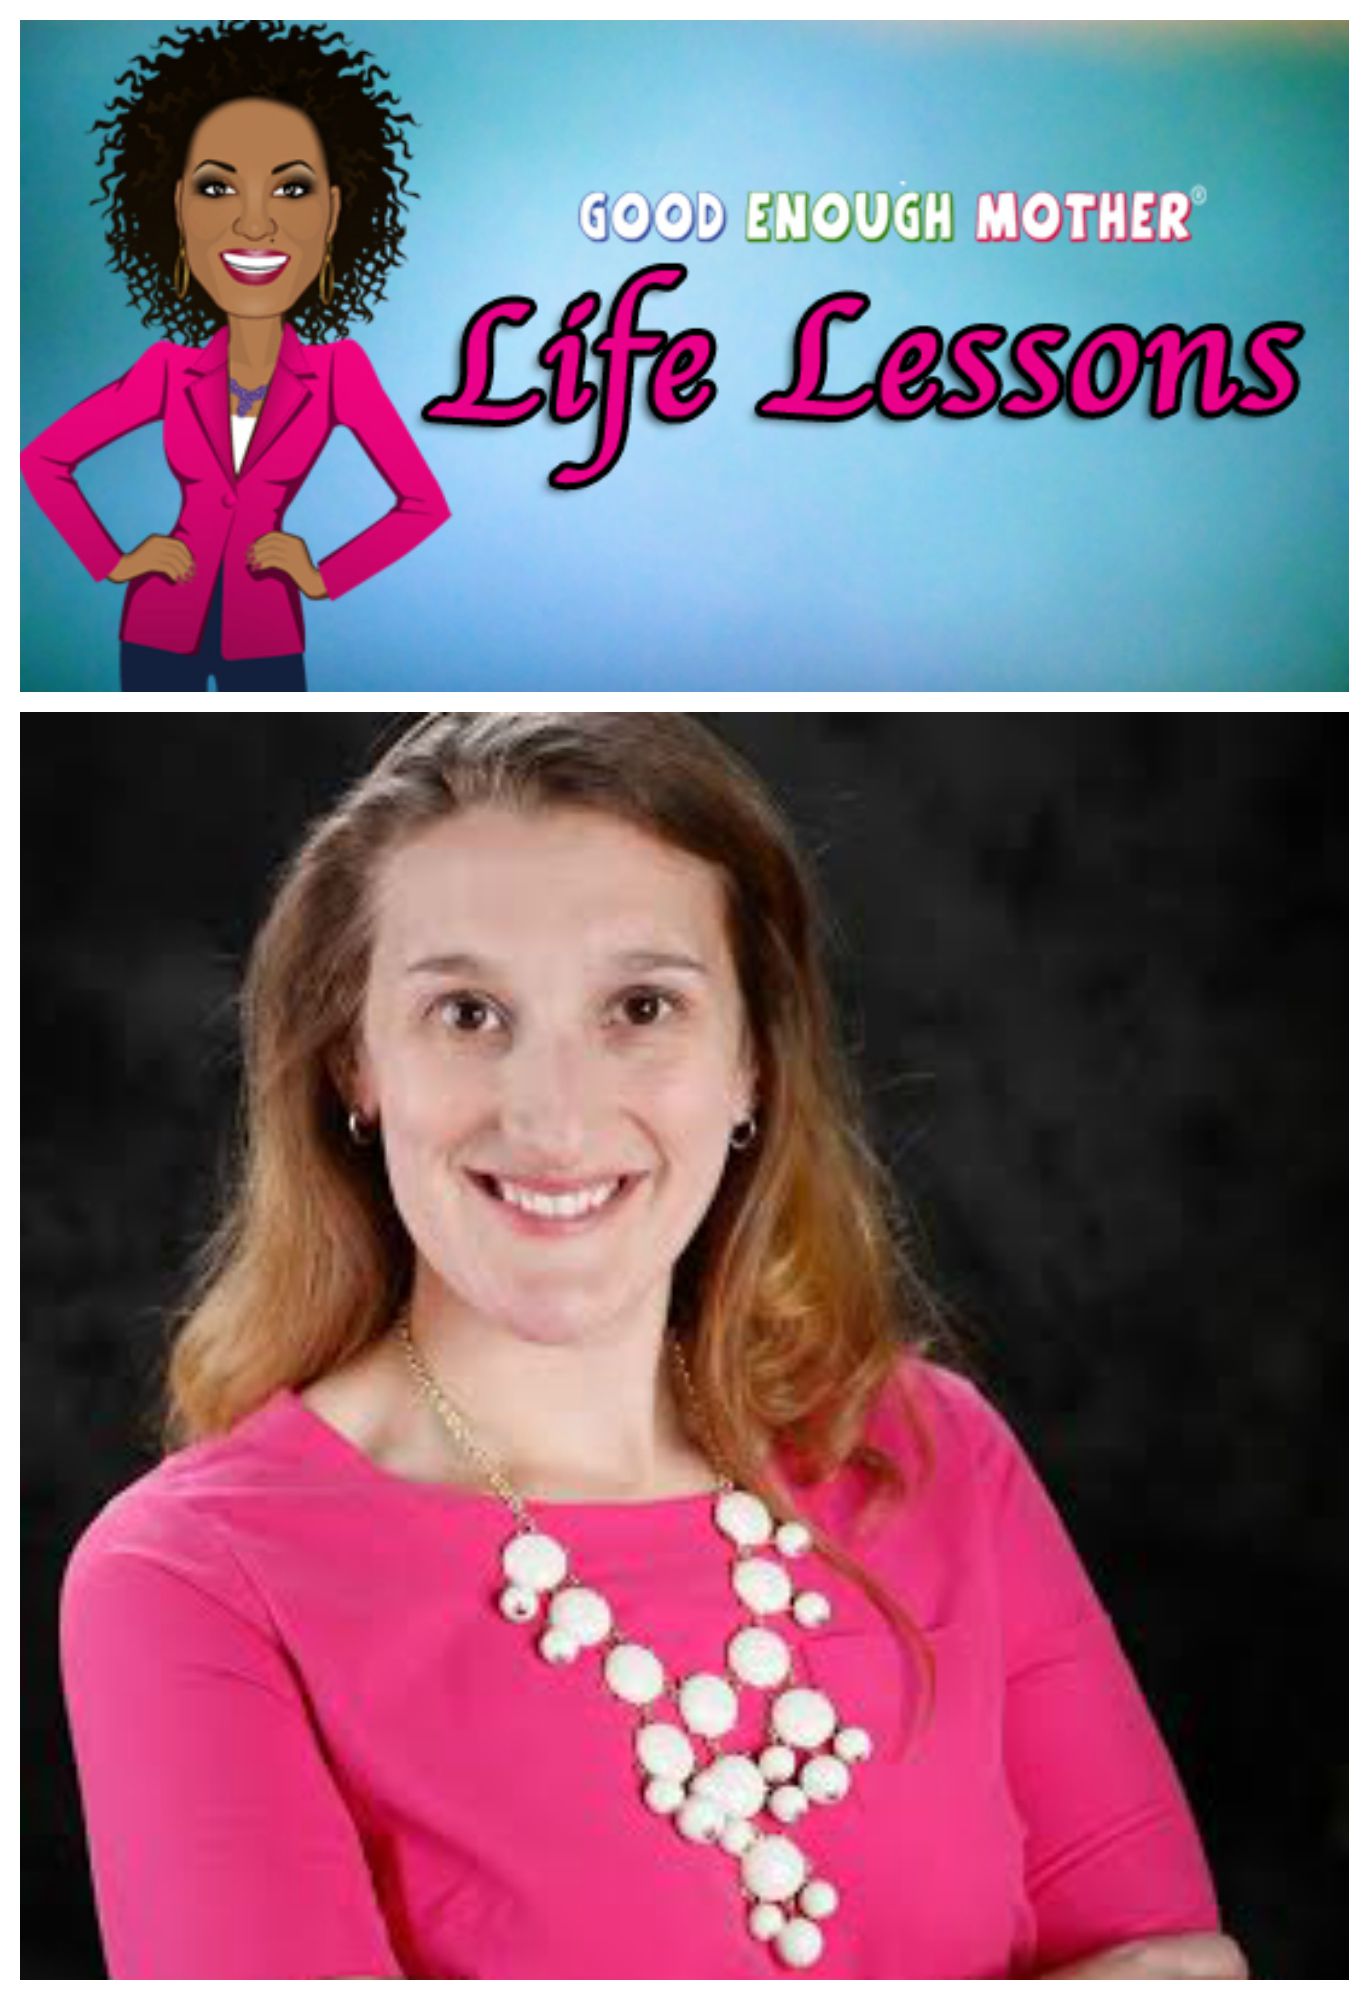 Life Lessons: Bonnie Joy Dewkett